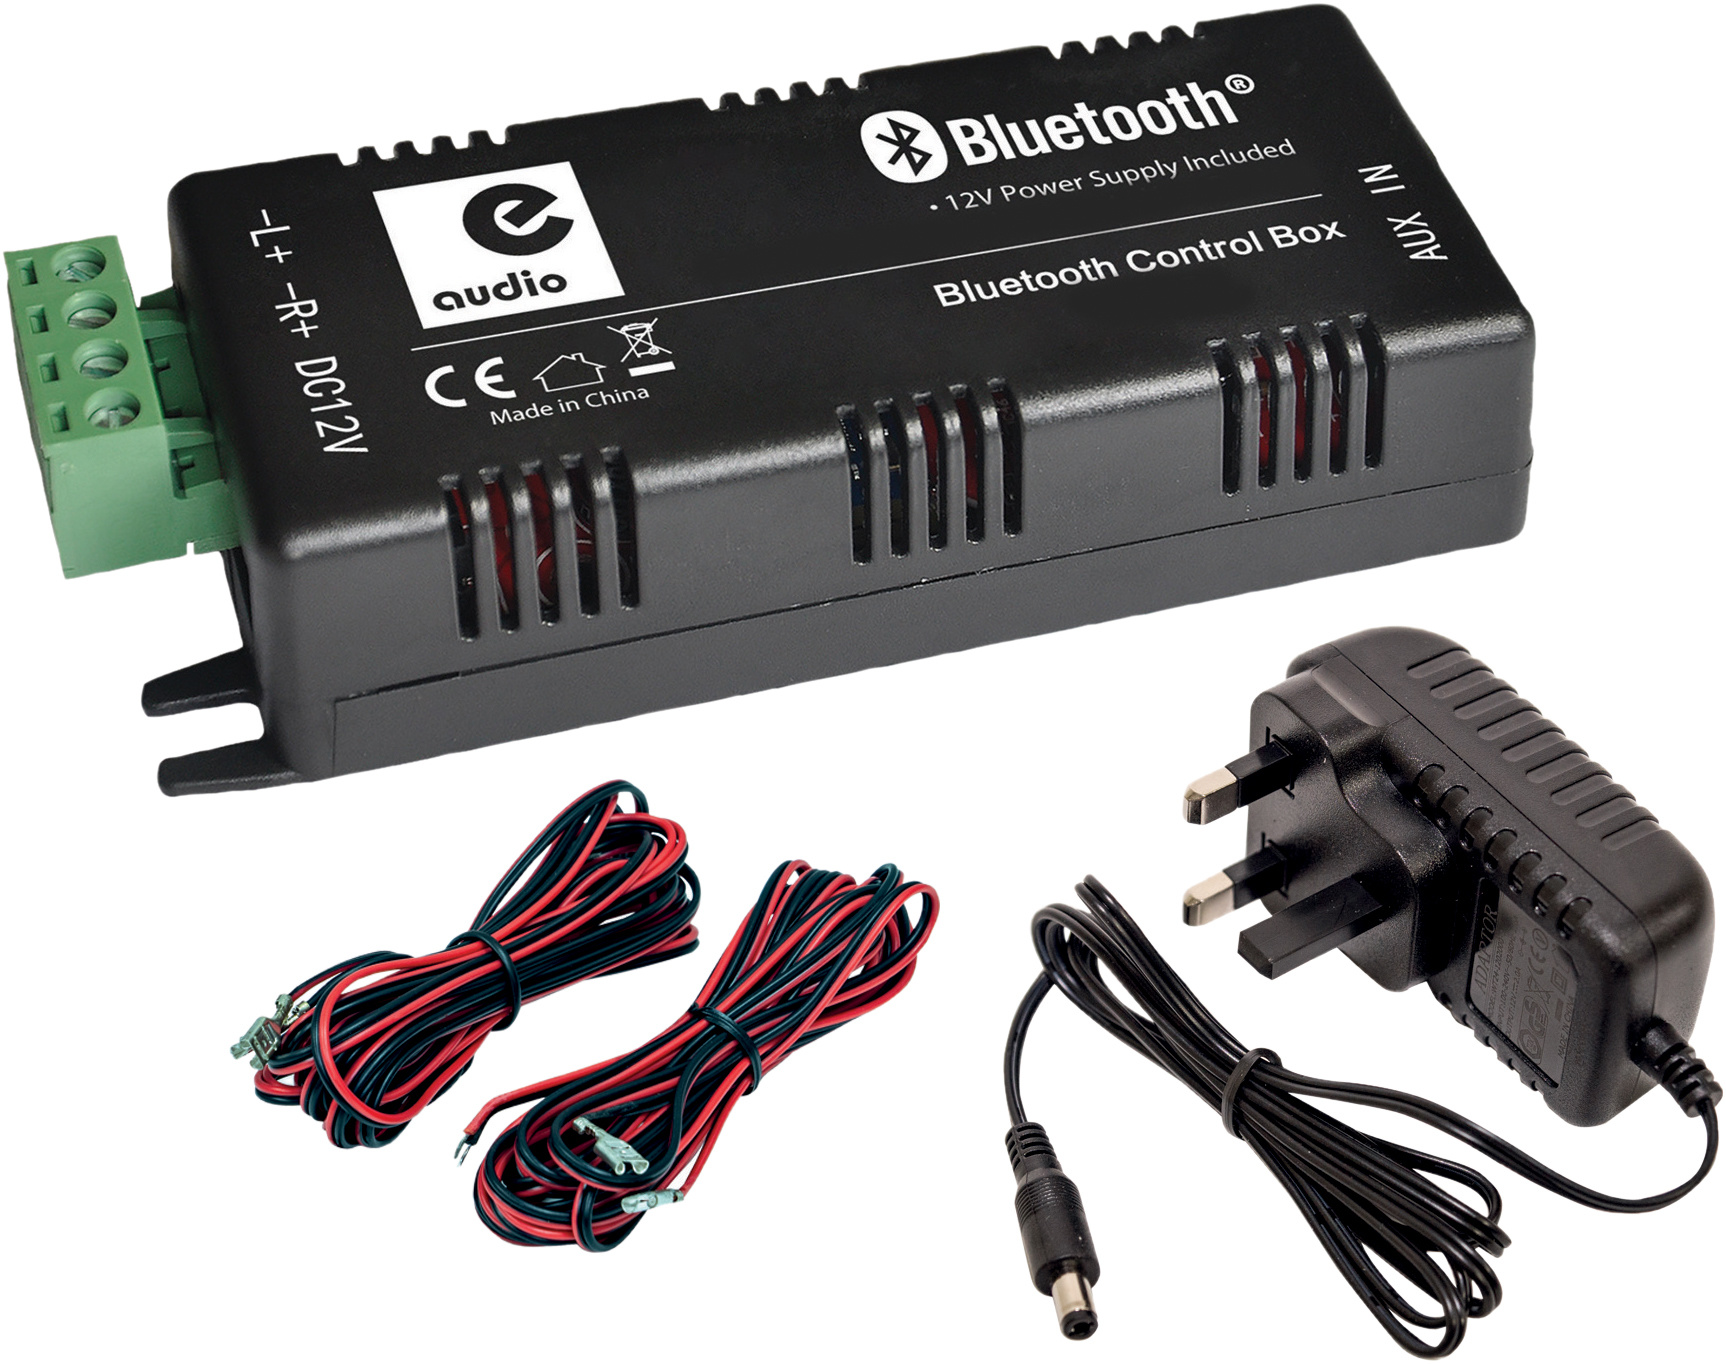 E-Audio B426BL mini versterker met Bluetooth en AUX input 2 x 15 watt -